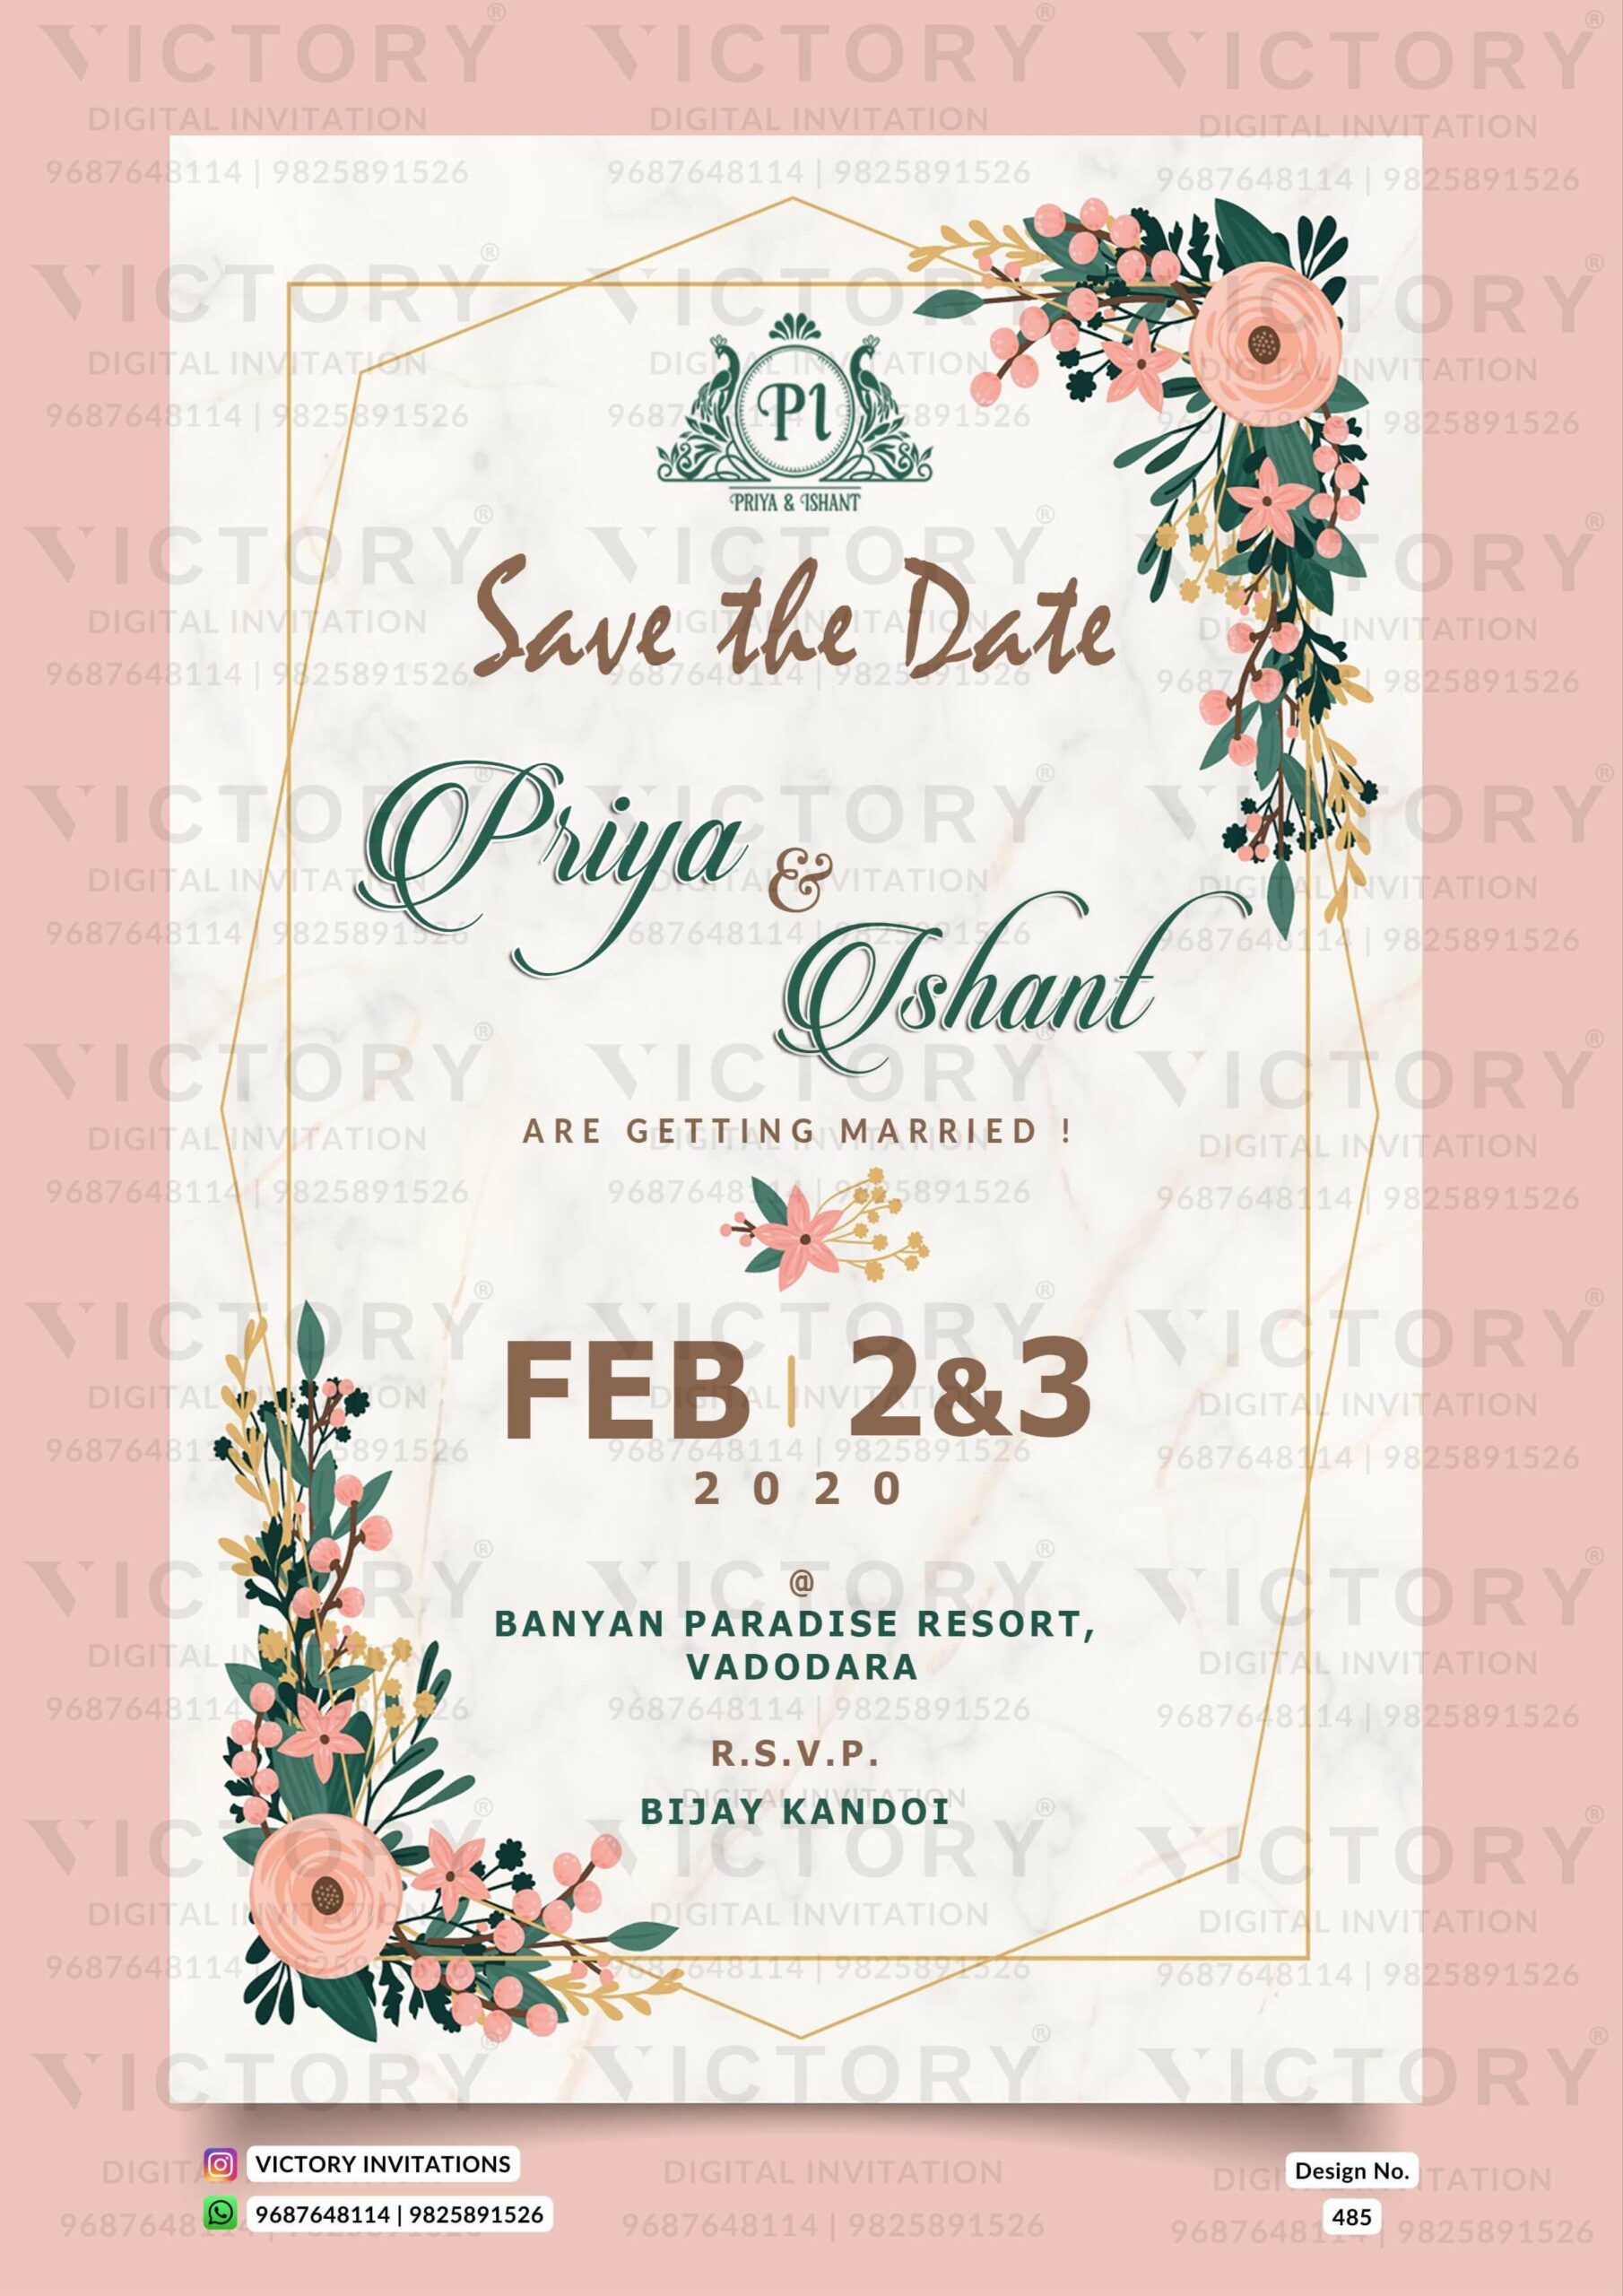 Save the Date digital invitation card design no.485